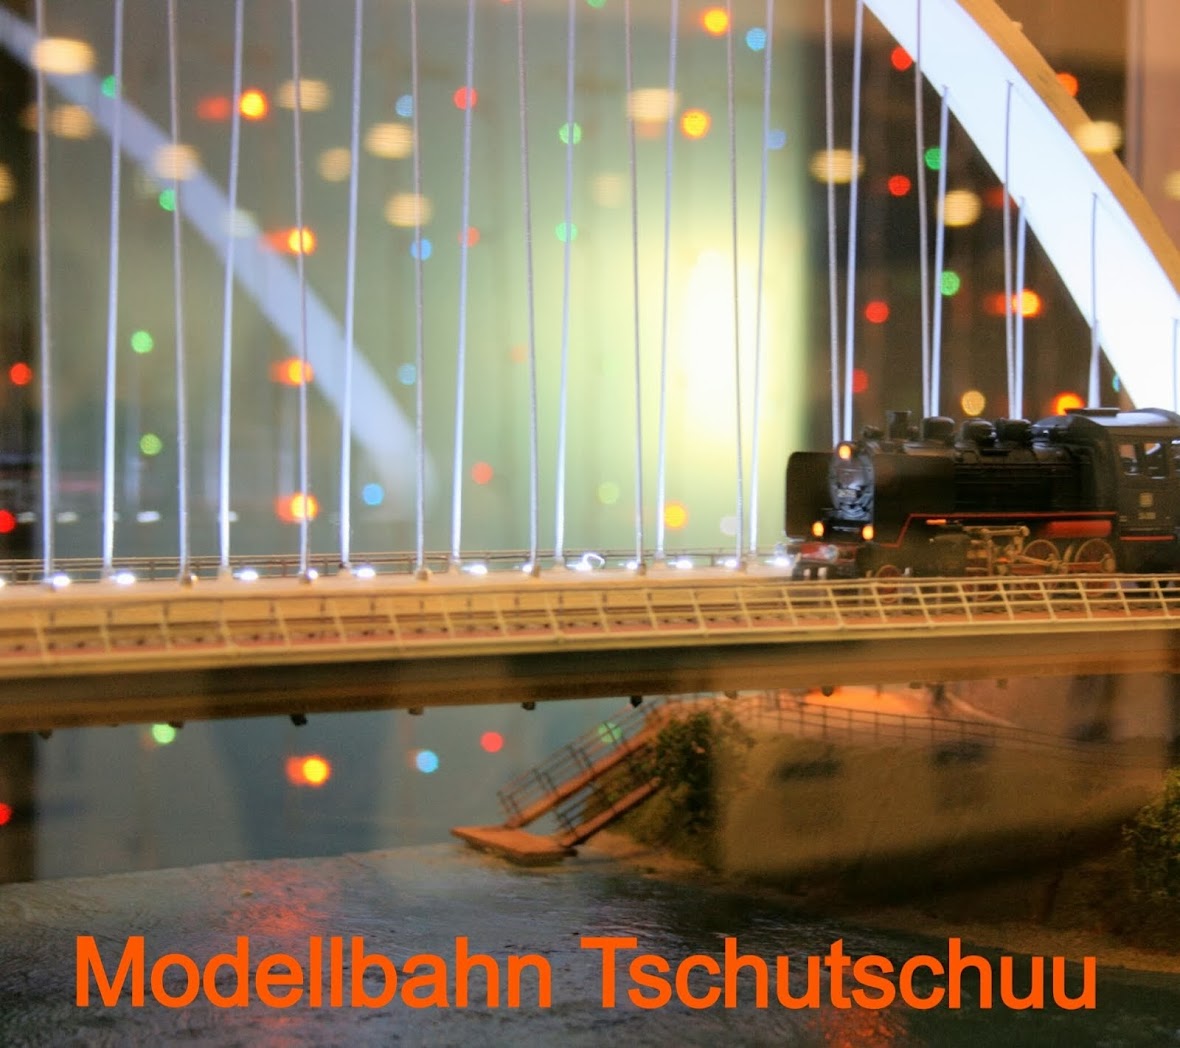 Modellbahn Tschutschuu